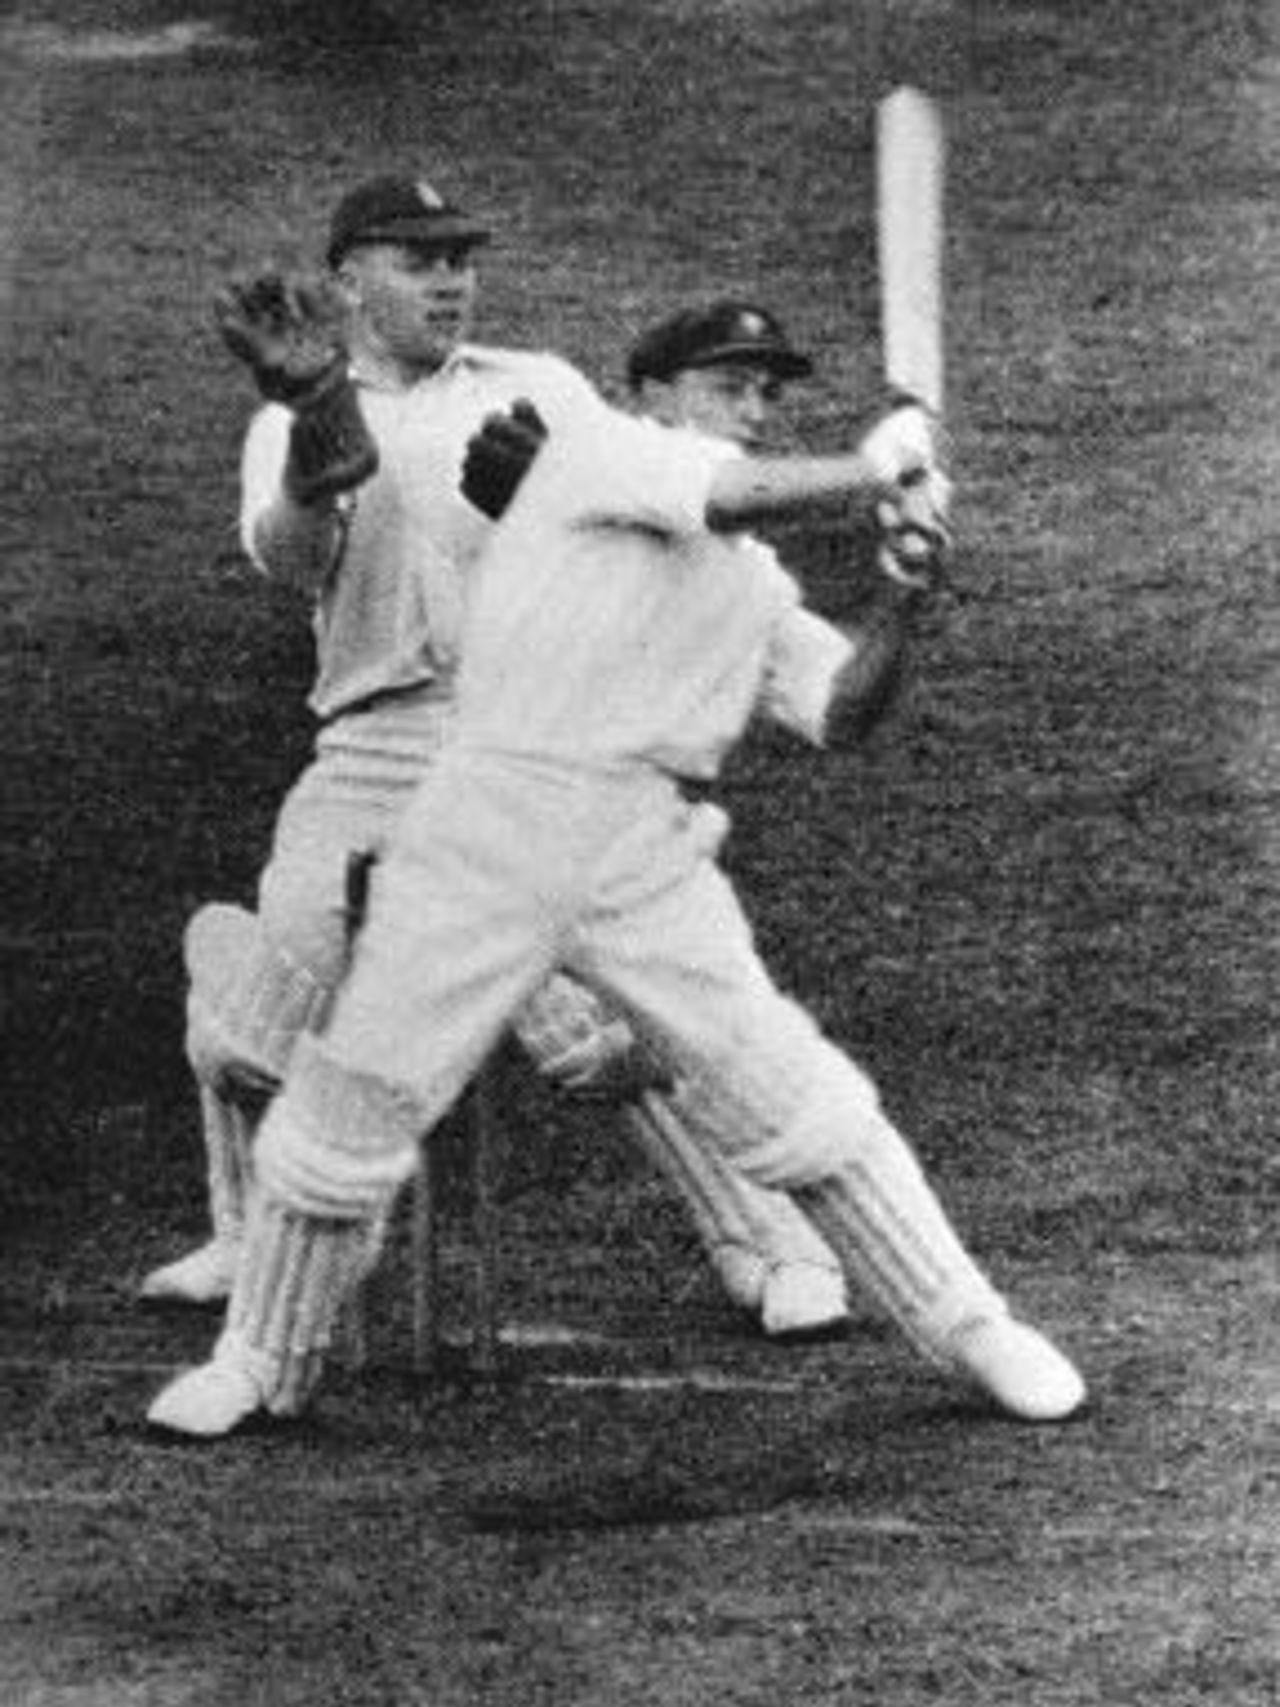 Don Bradman batting on his way to 334, England v Australia, 3rd Test, Leeds, July 11, 1930